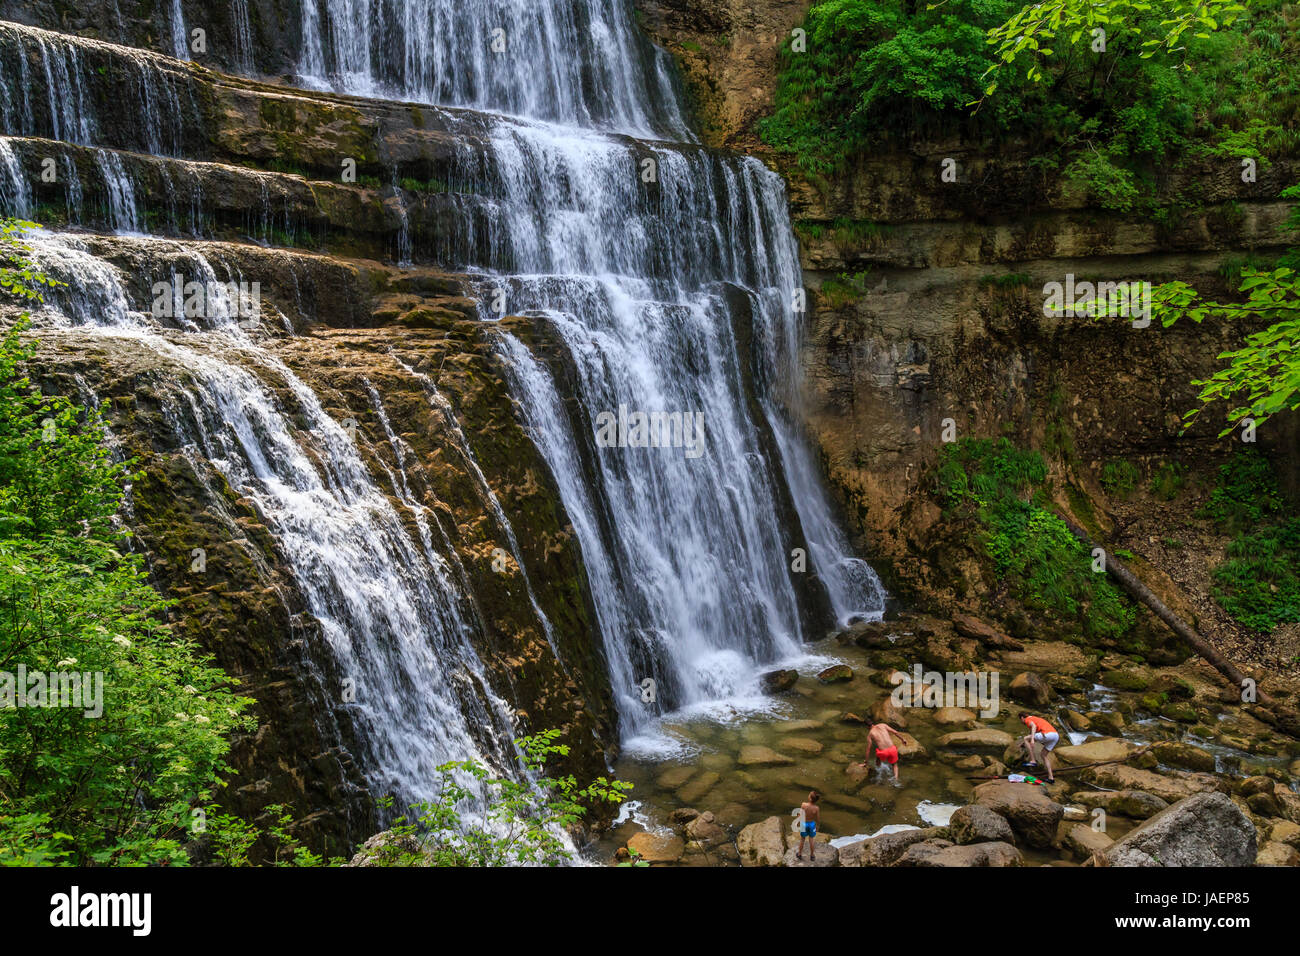 France, Jura, Menetrux en Joux, Herisson waterfalls Eventaille fall Stock Photo